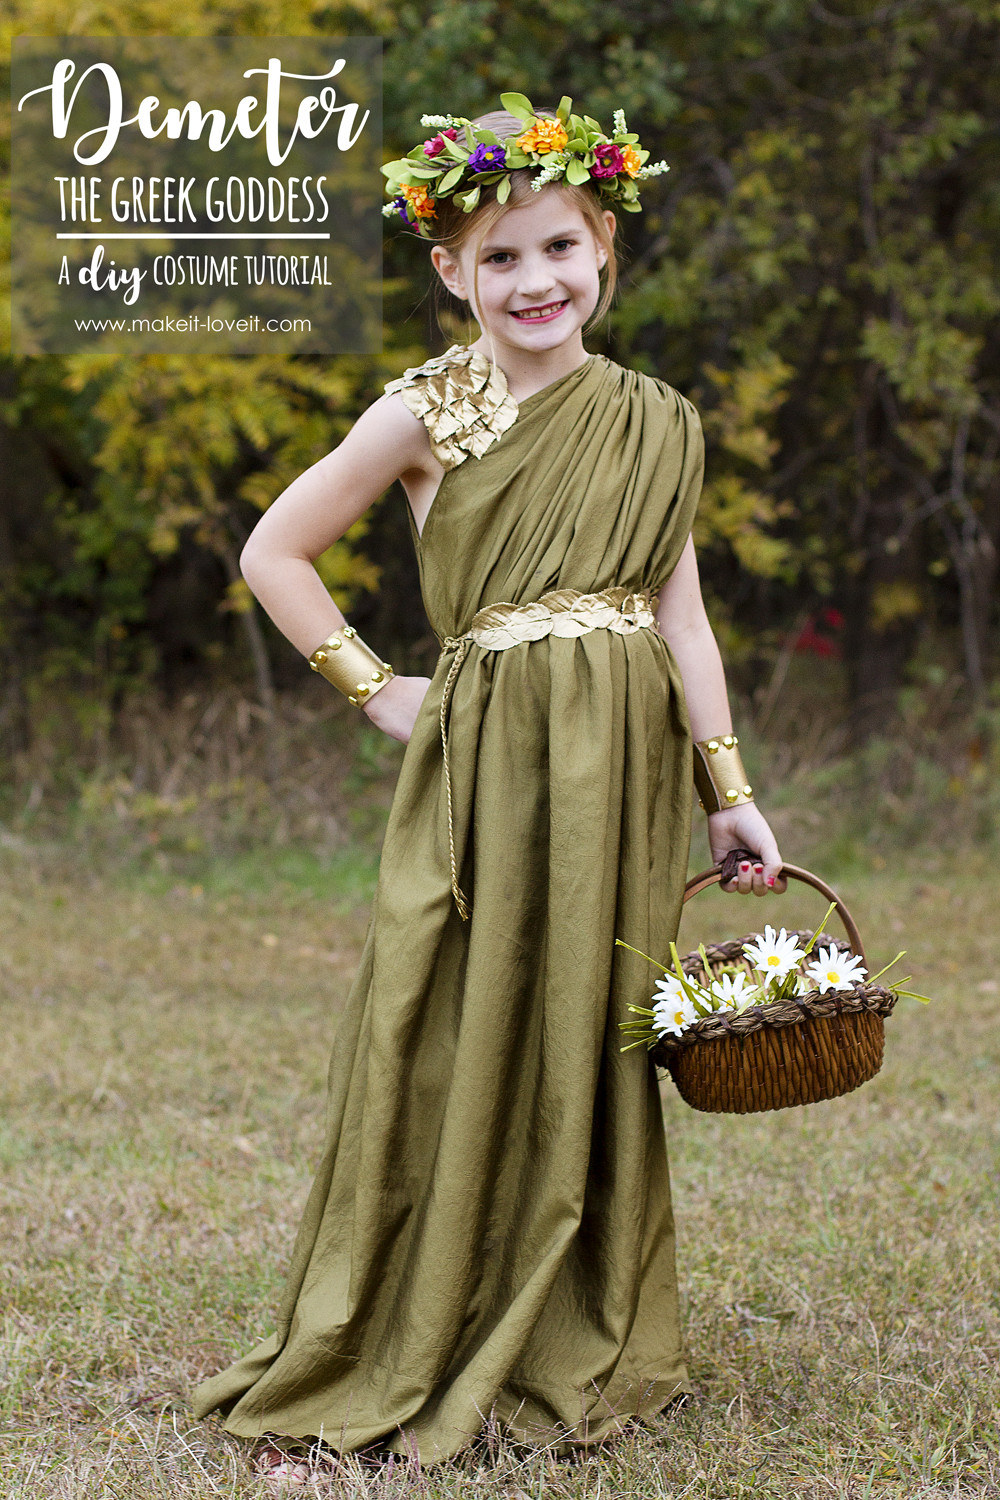 Best ideas about Greek Goddess Costume DIY
. Save or Pin DIY Greek Goddess Costume DEMETER Now.